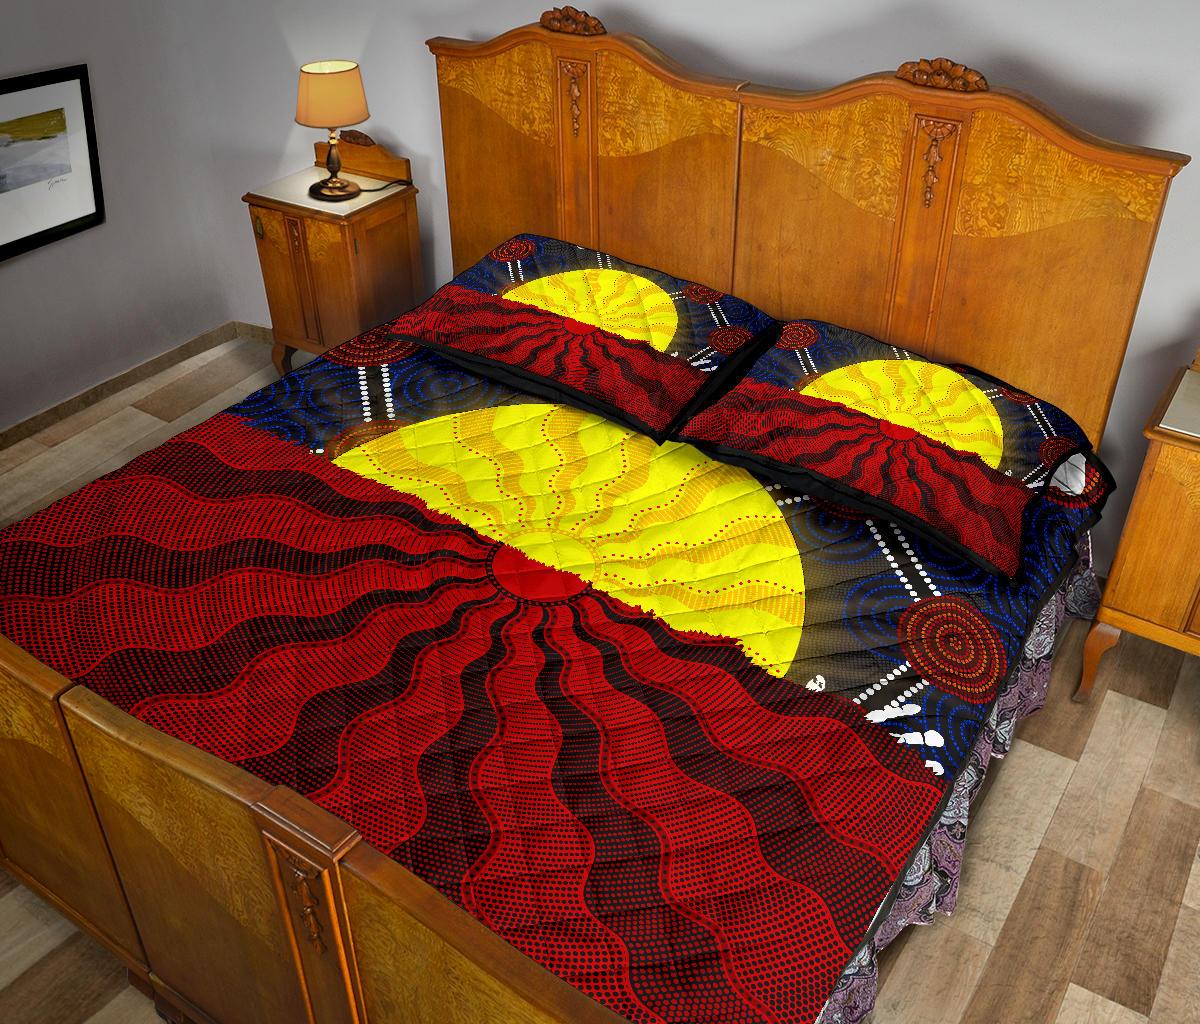 aboriginal-quilt-bed-set-aboriginal-lives-matter-flag-sun-dot-painting